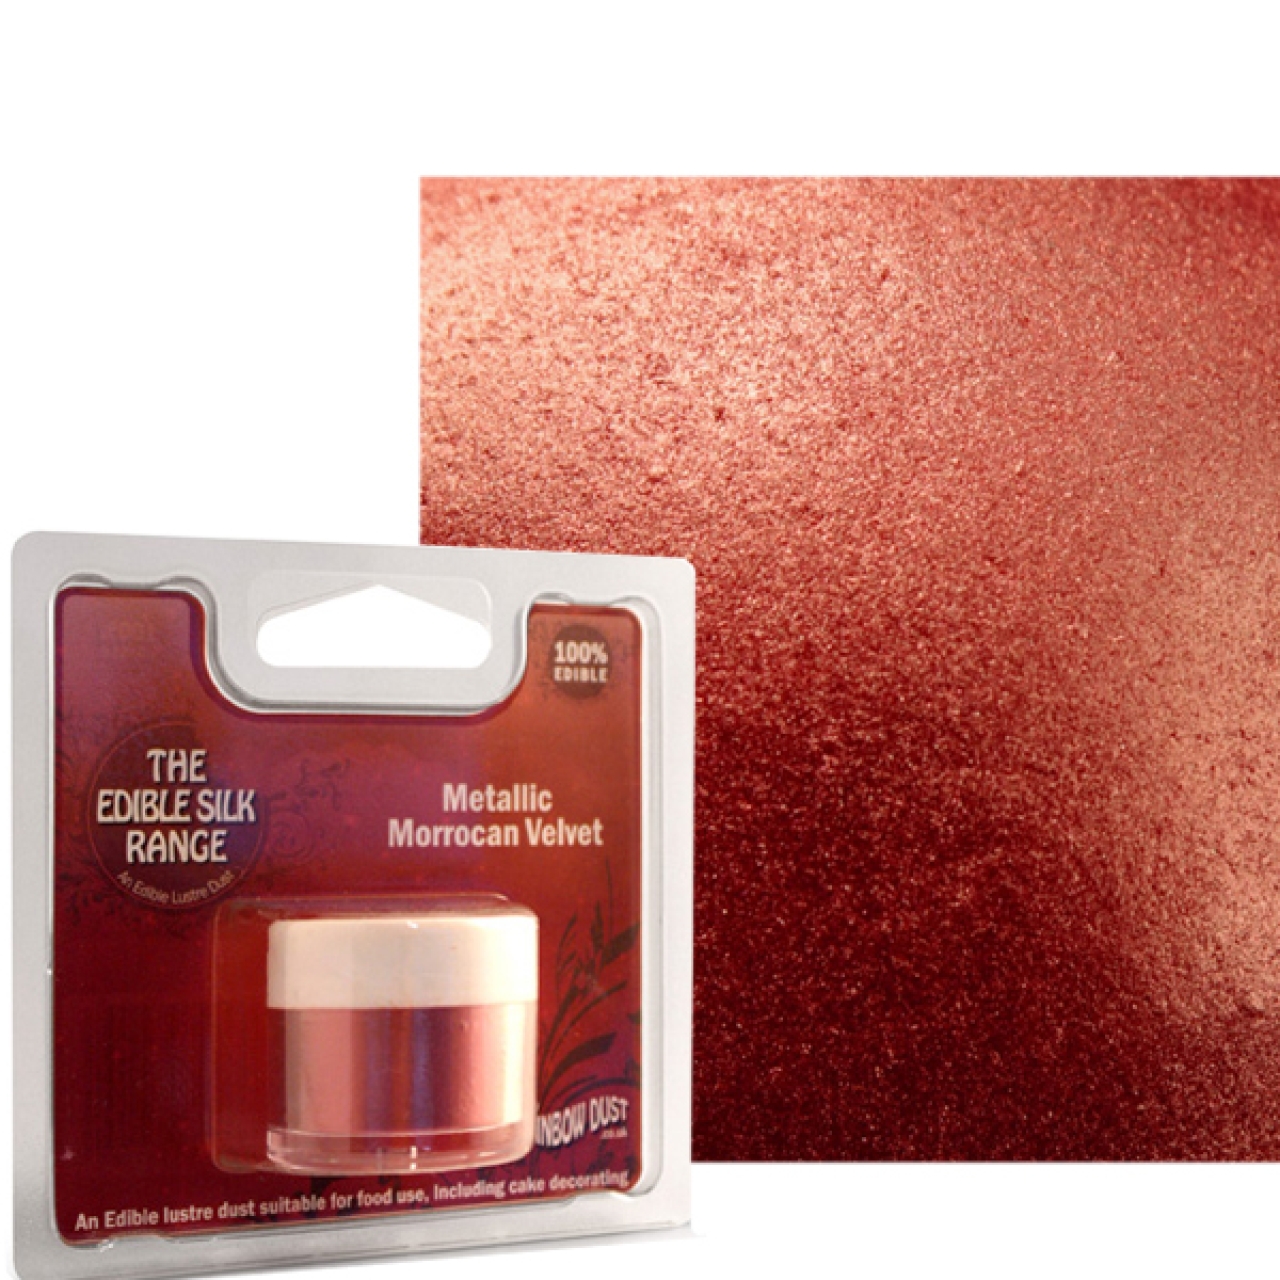 Speisefarbpulver "Metallic Marokko-Samtrot", 100 % essbar, Farbe: Rost, 3 g, Rainbow Dust